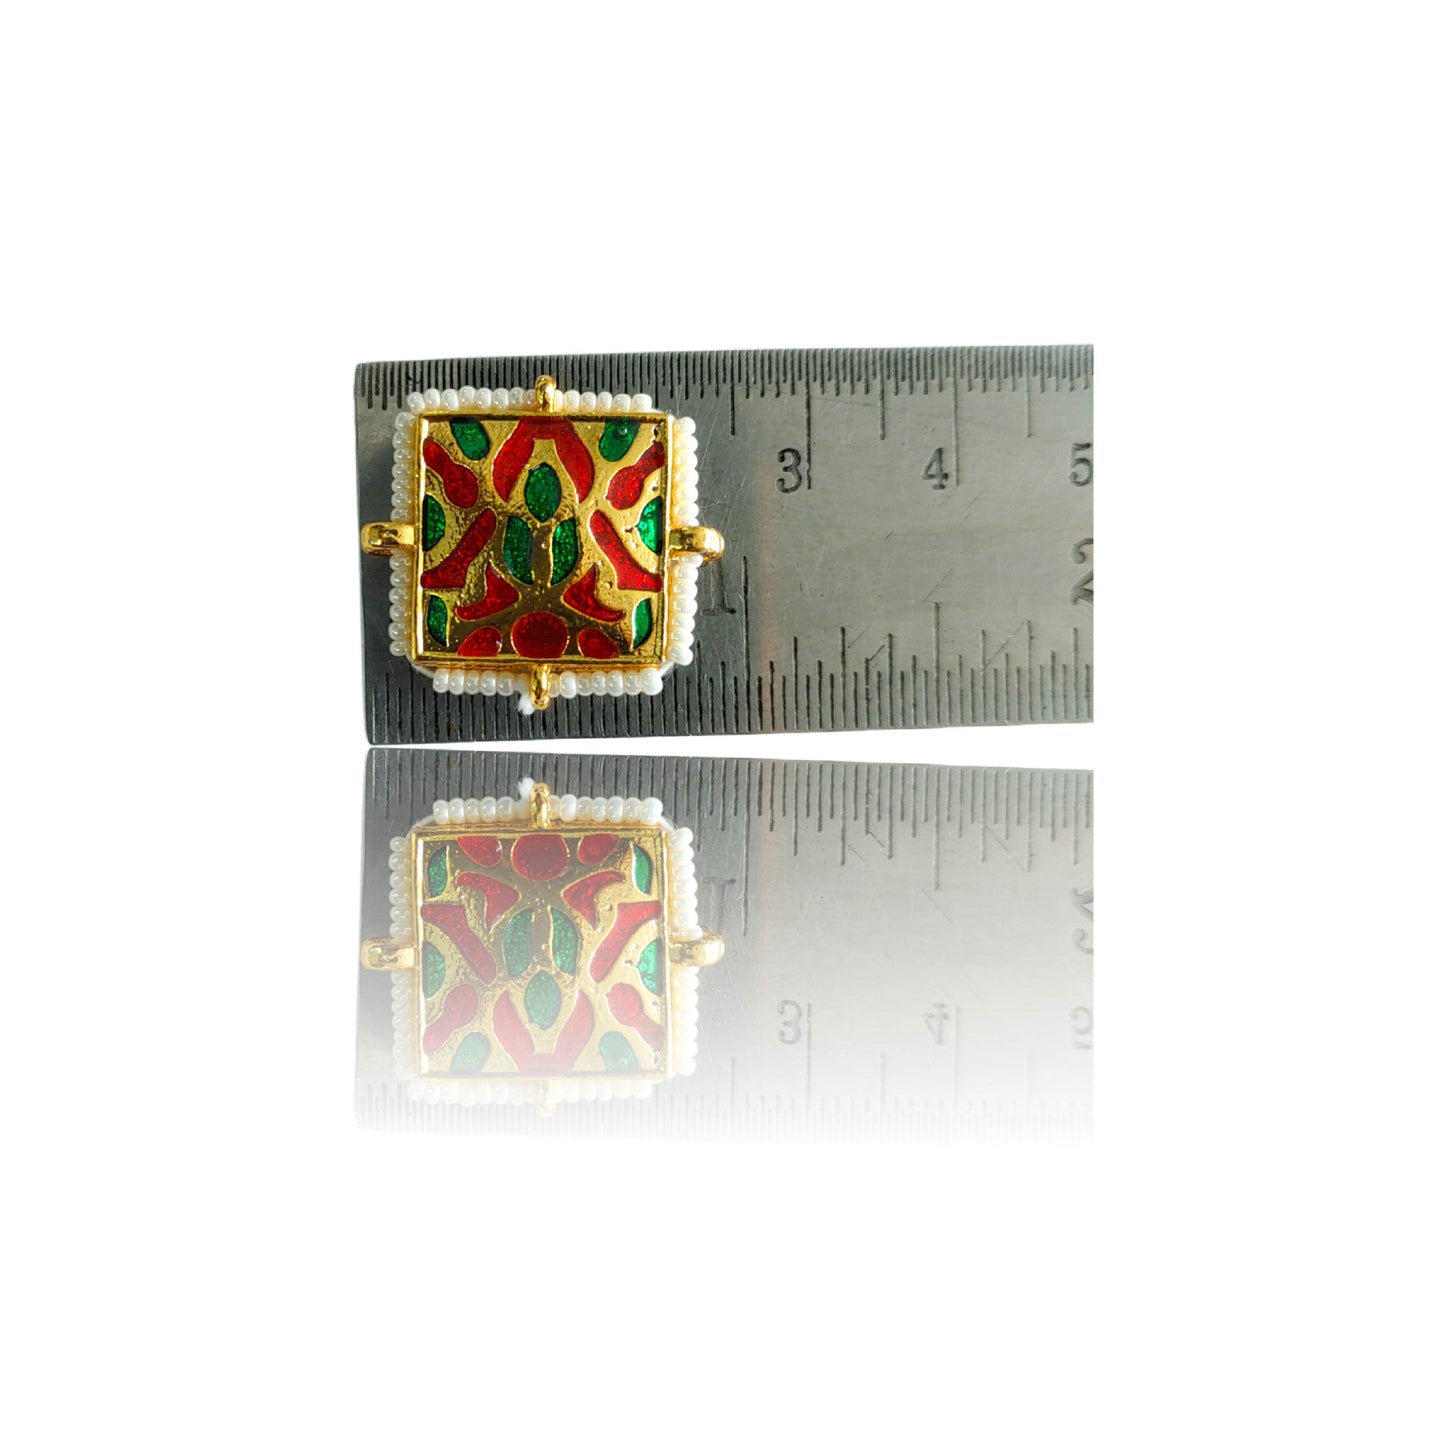 Indian Petals 50 Pcs Square Shaped Metal Meena Choki Motif for Rakhi, Jewelry designing and Craft Making or Decor